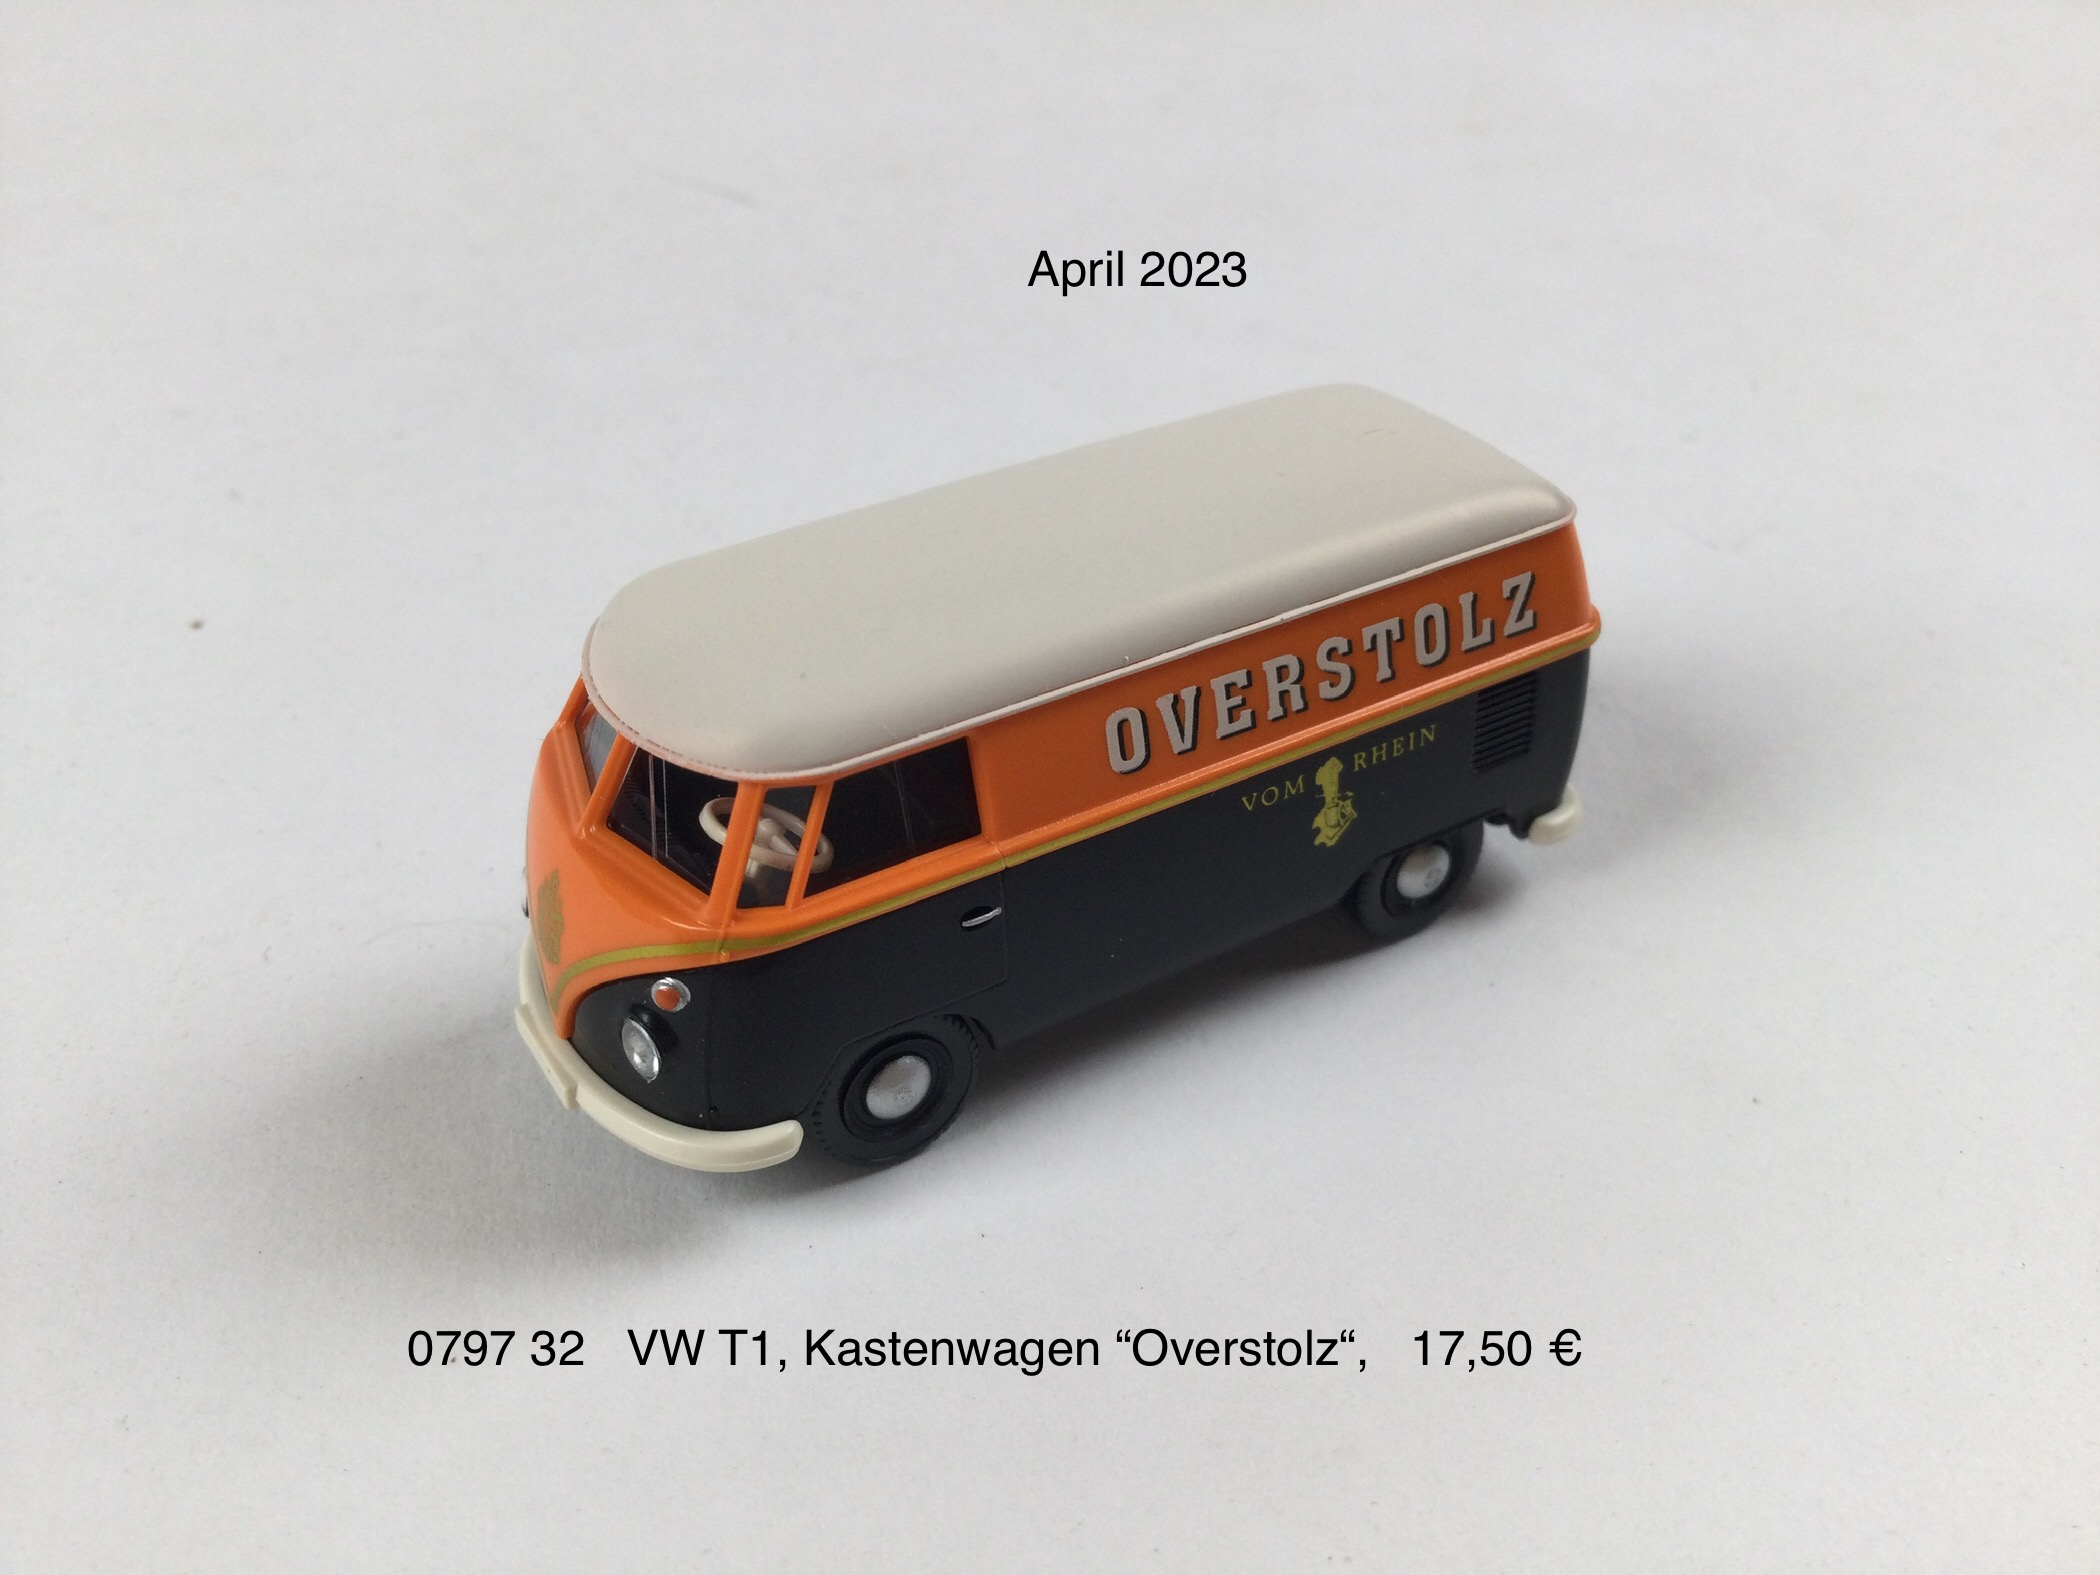 VW T1 Kastenwagen "Overstolz"